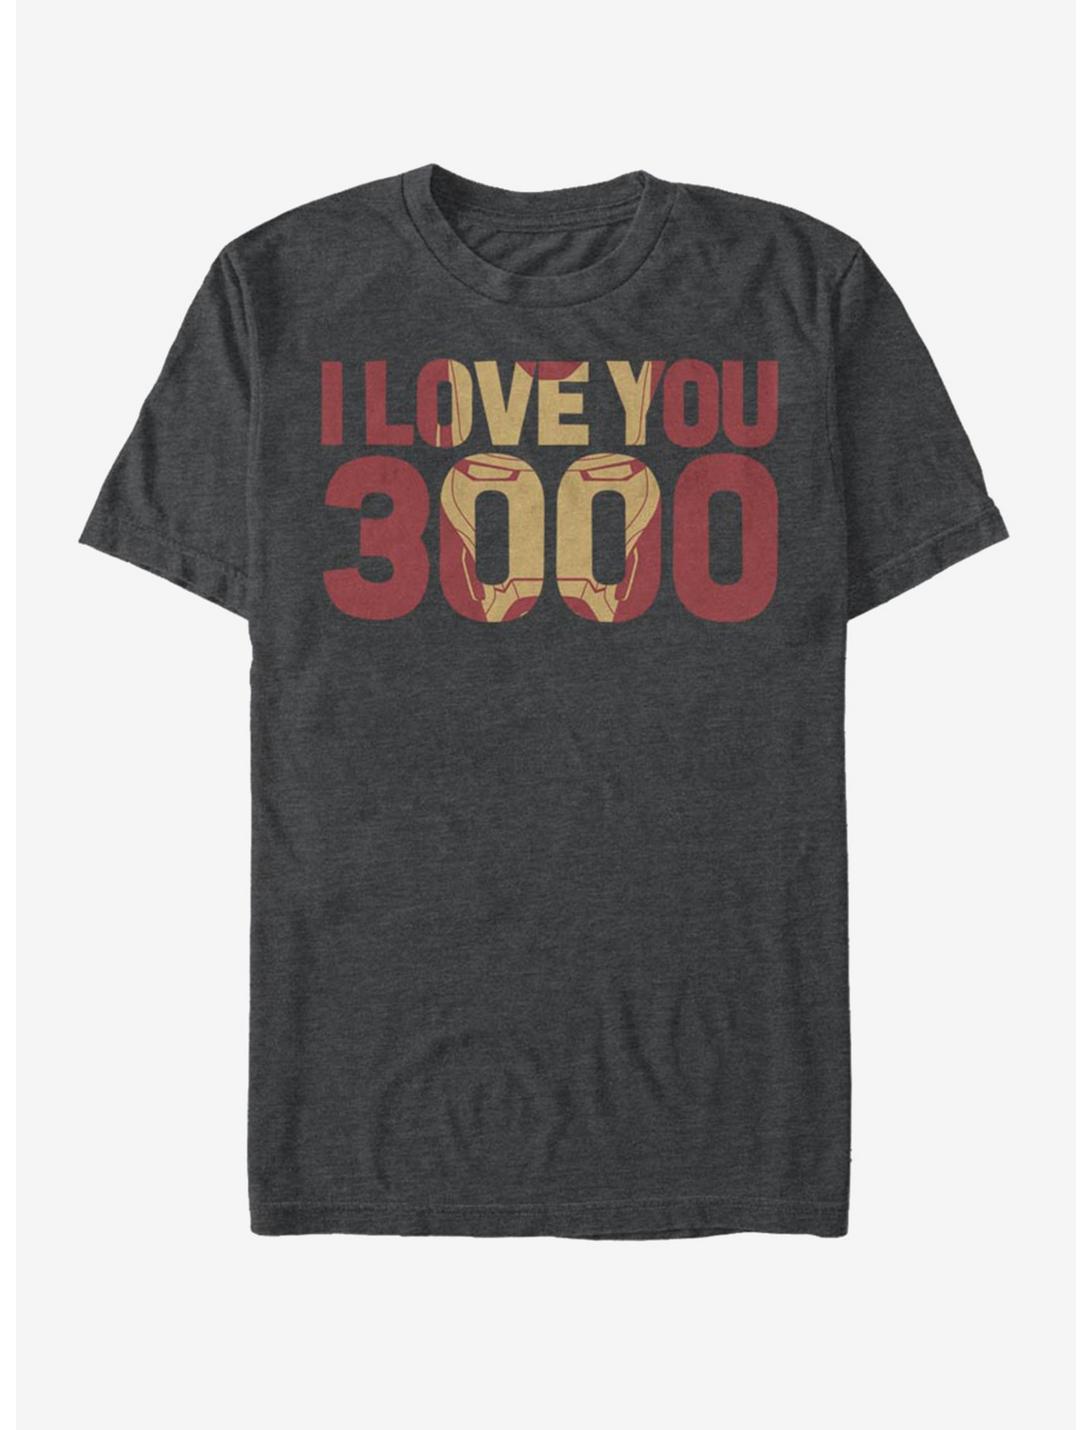 Marvel Iron Man Love You 3000 T-Shirt, , hi-res